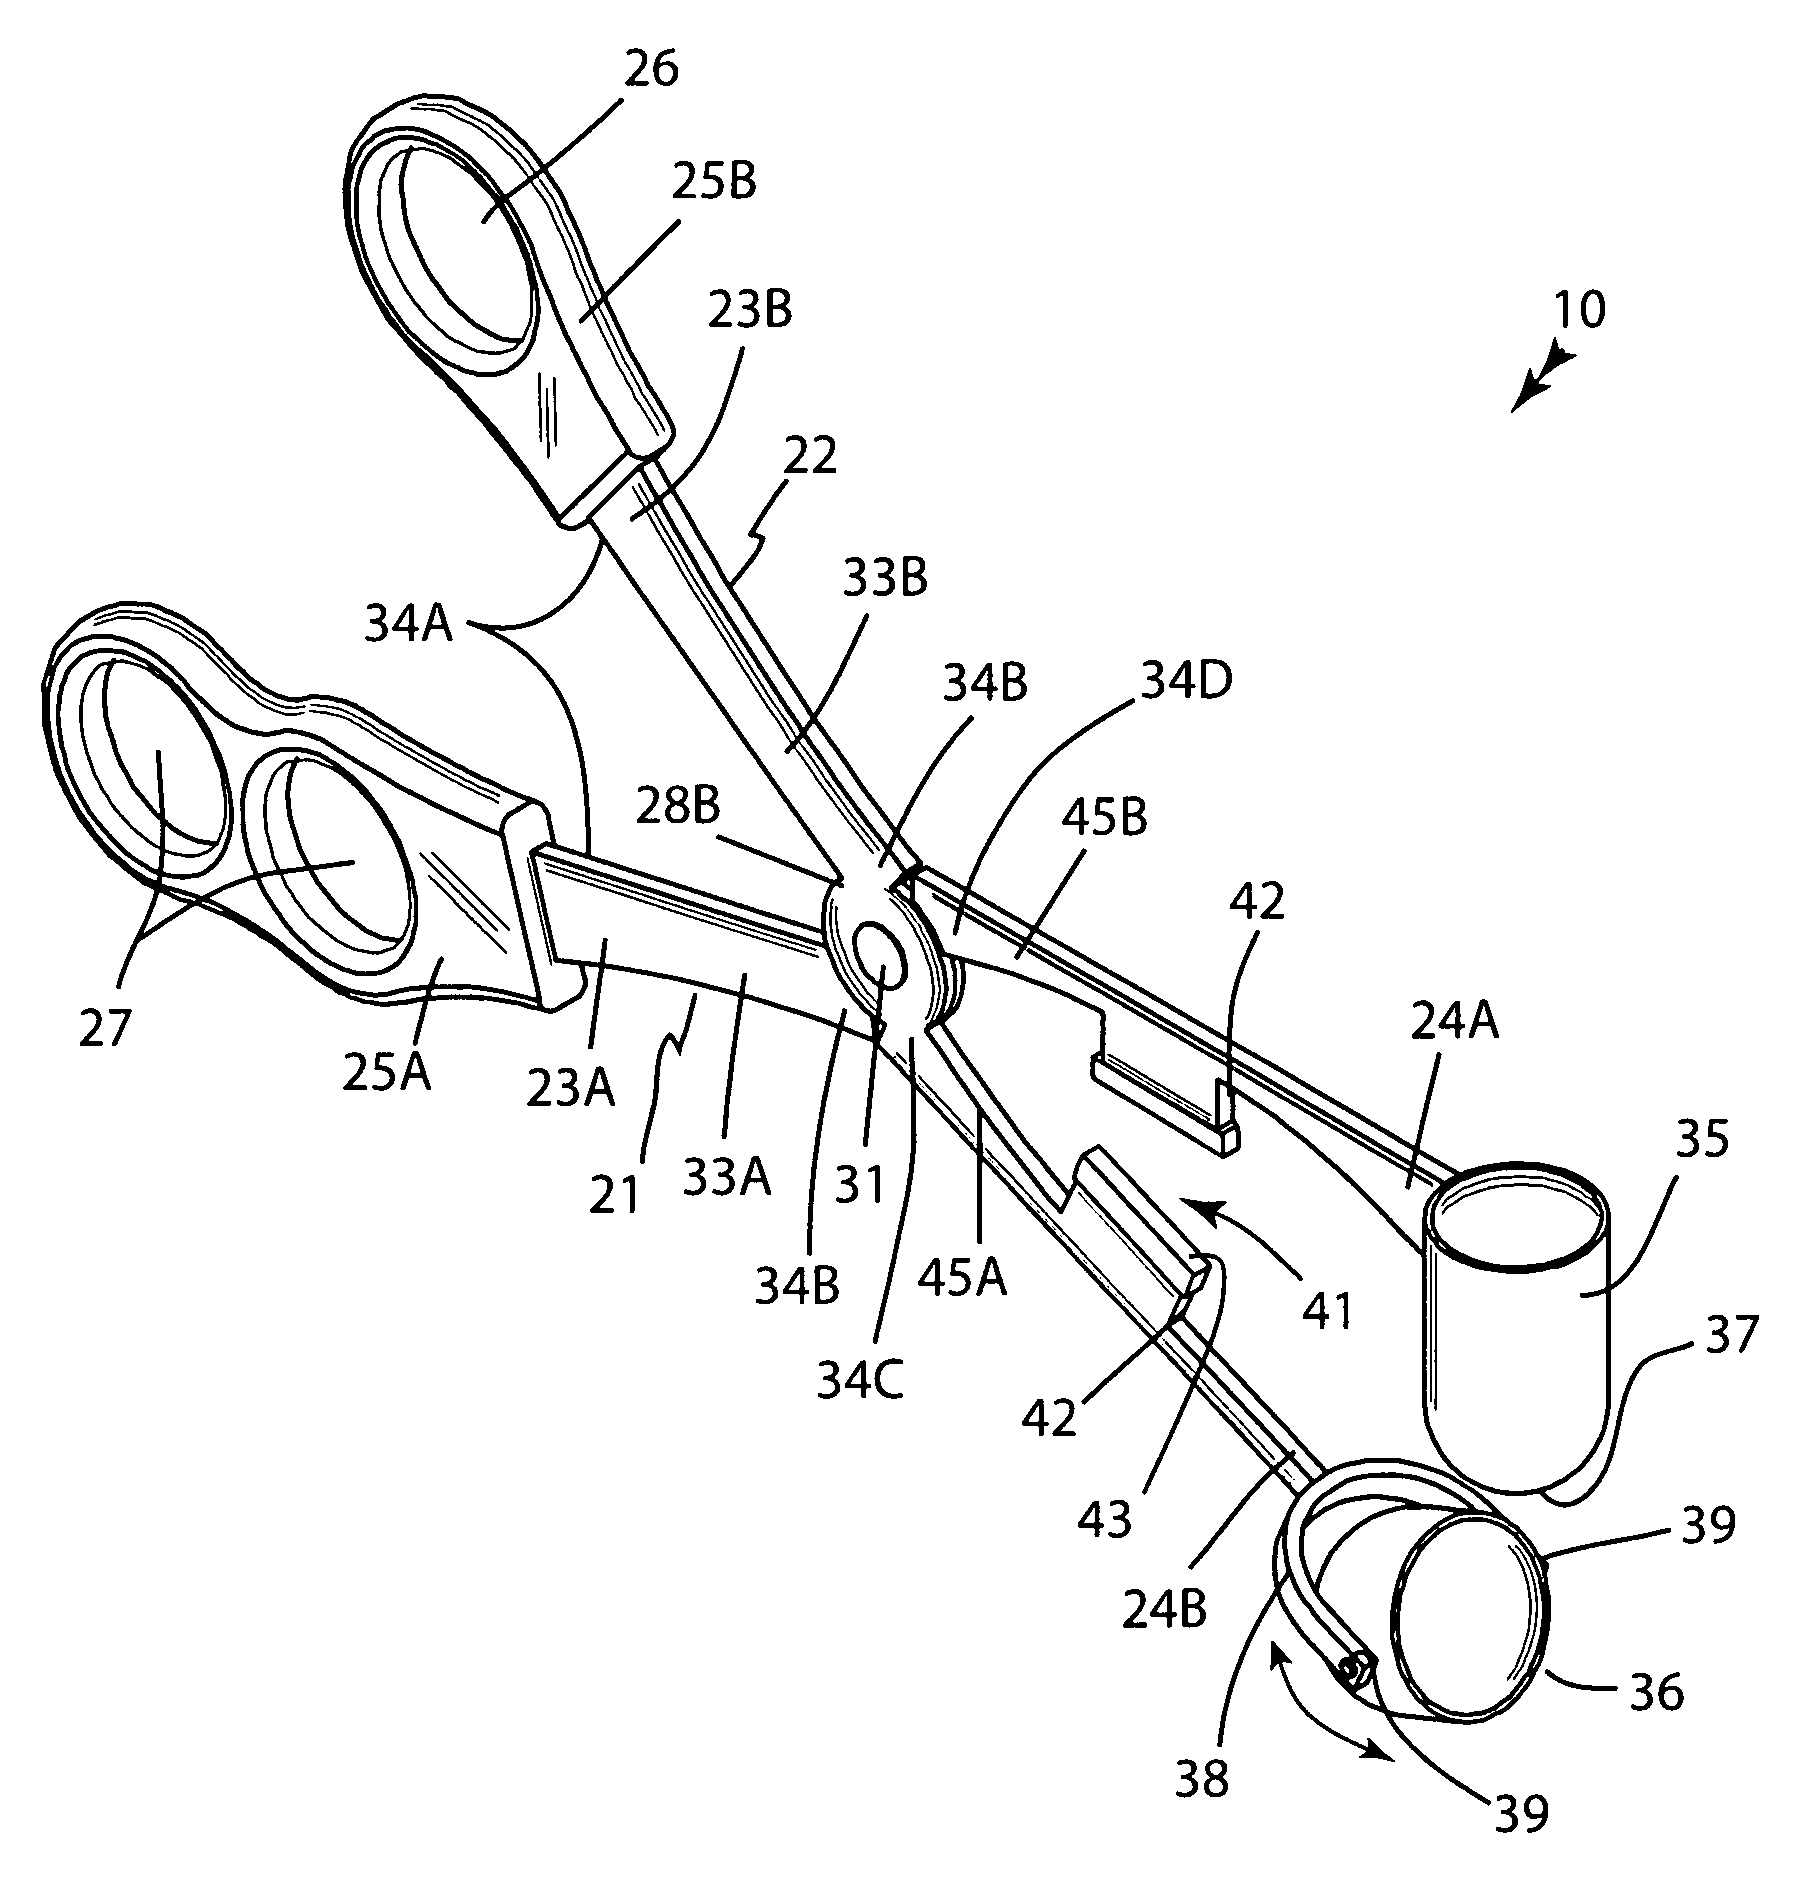 Hand-operable pill crushing apparatus